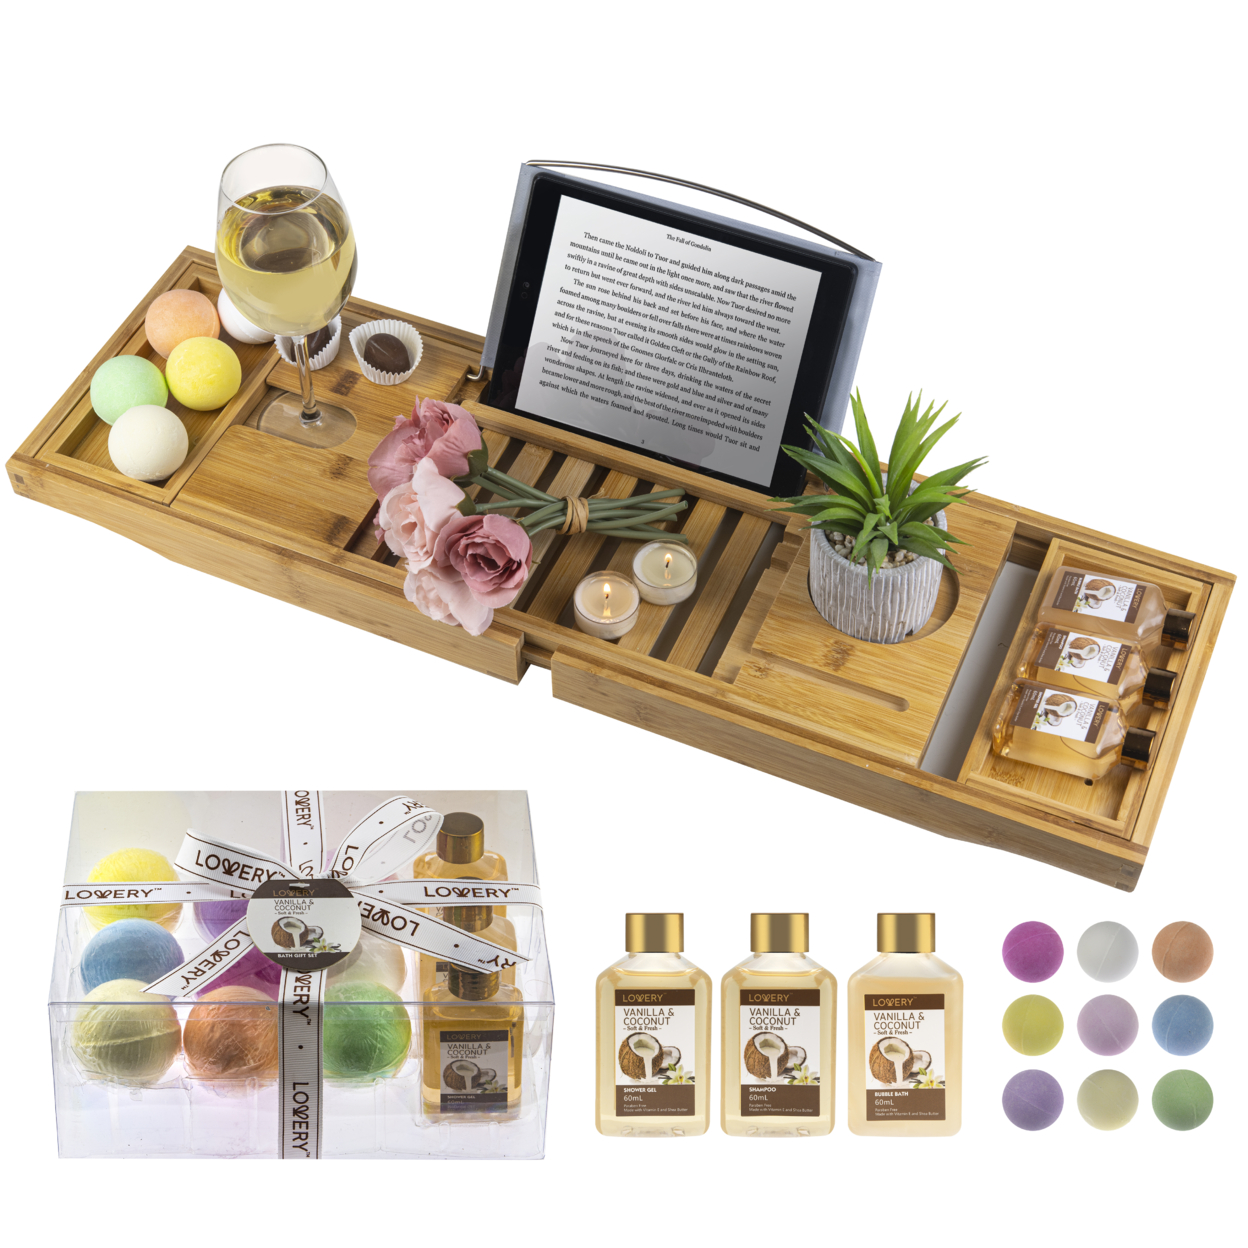 Lovery Premium Bamboo Bathtub Caddy Gift Set - Expandable Tray